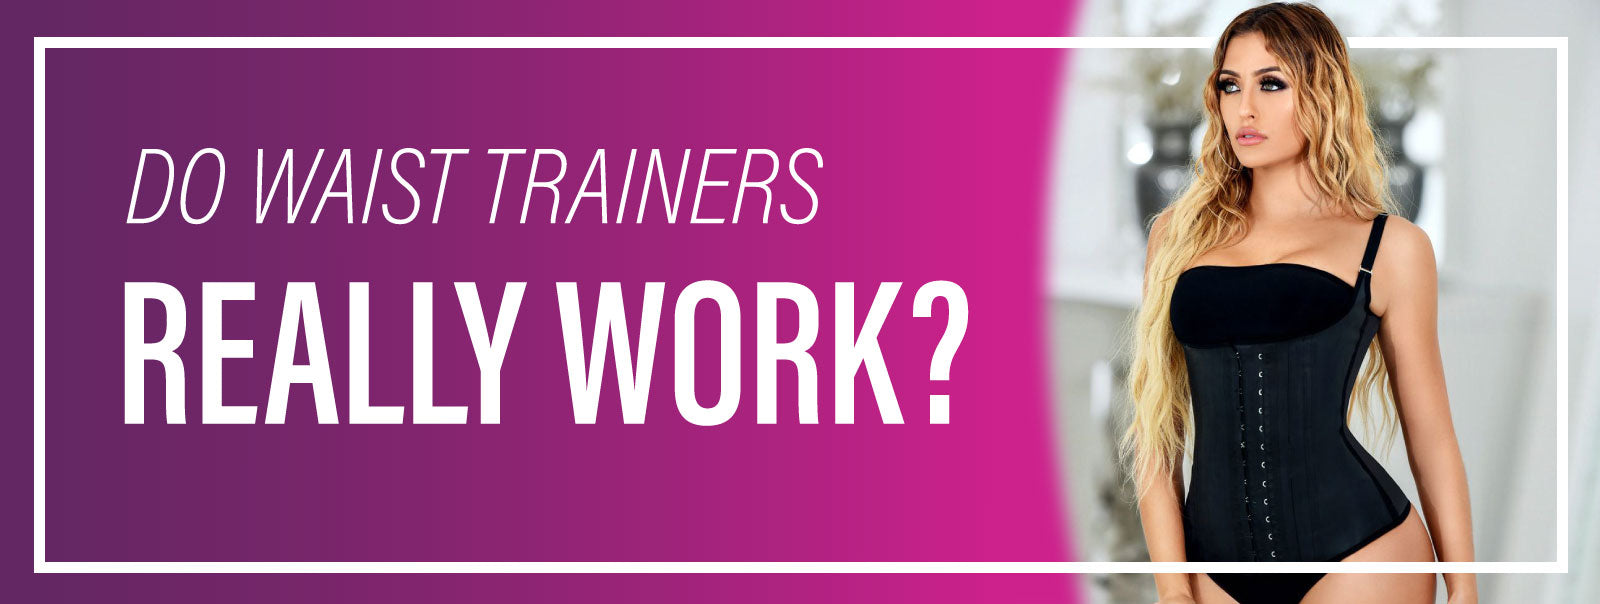 Do waist trainers really work?